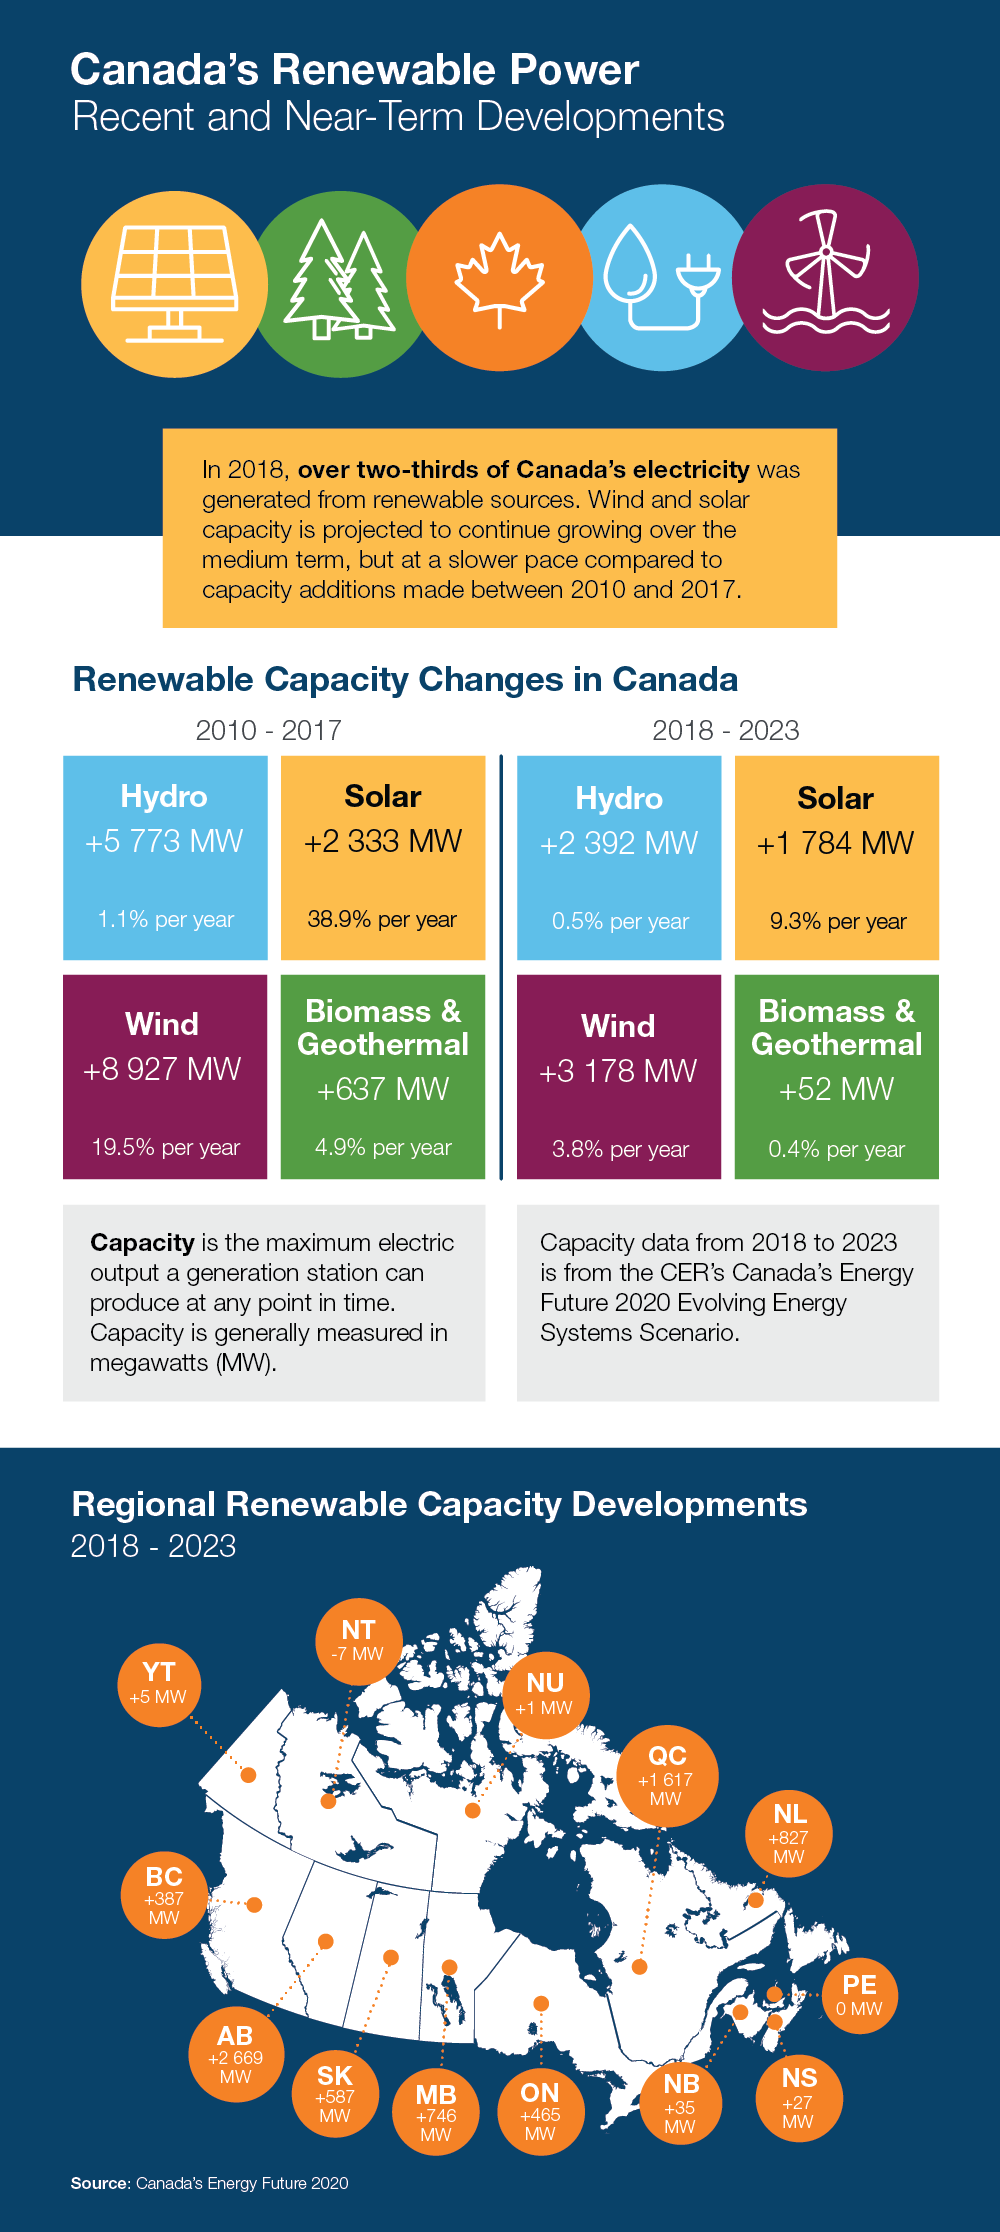 Canada's Renewable Power: Recent and Near-Term Developments